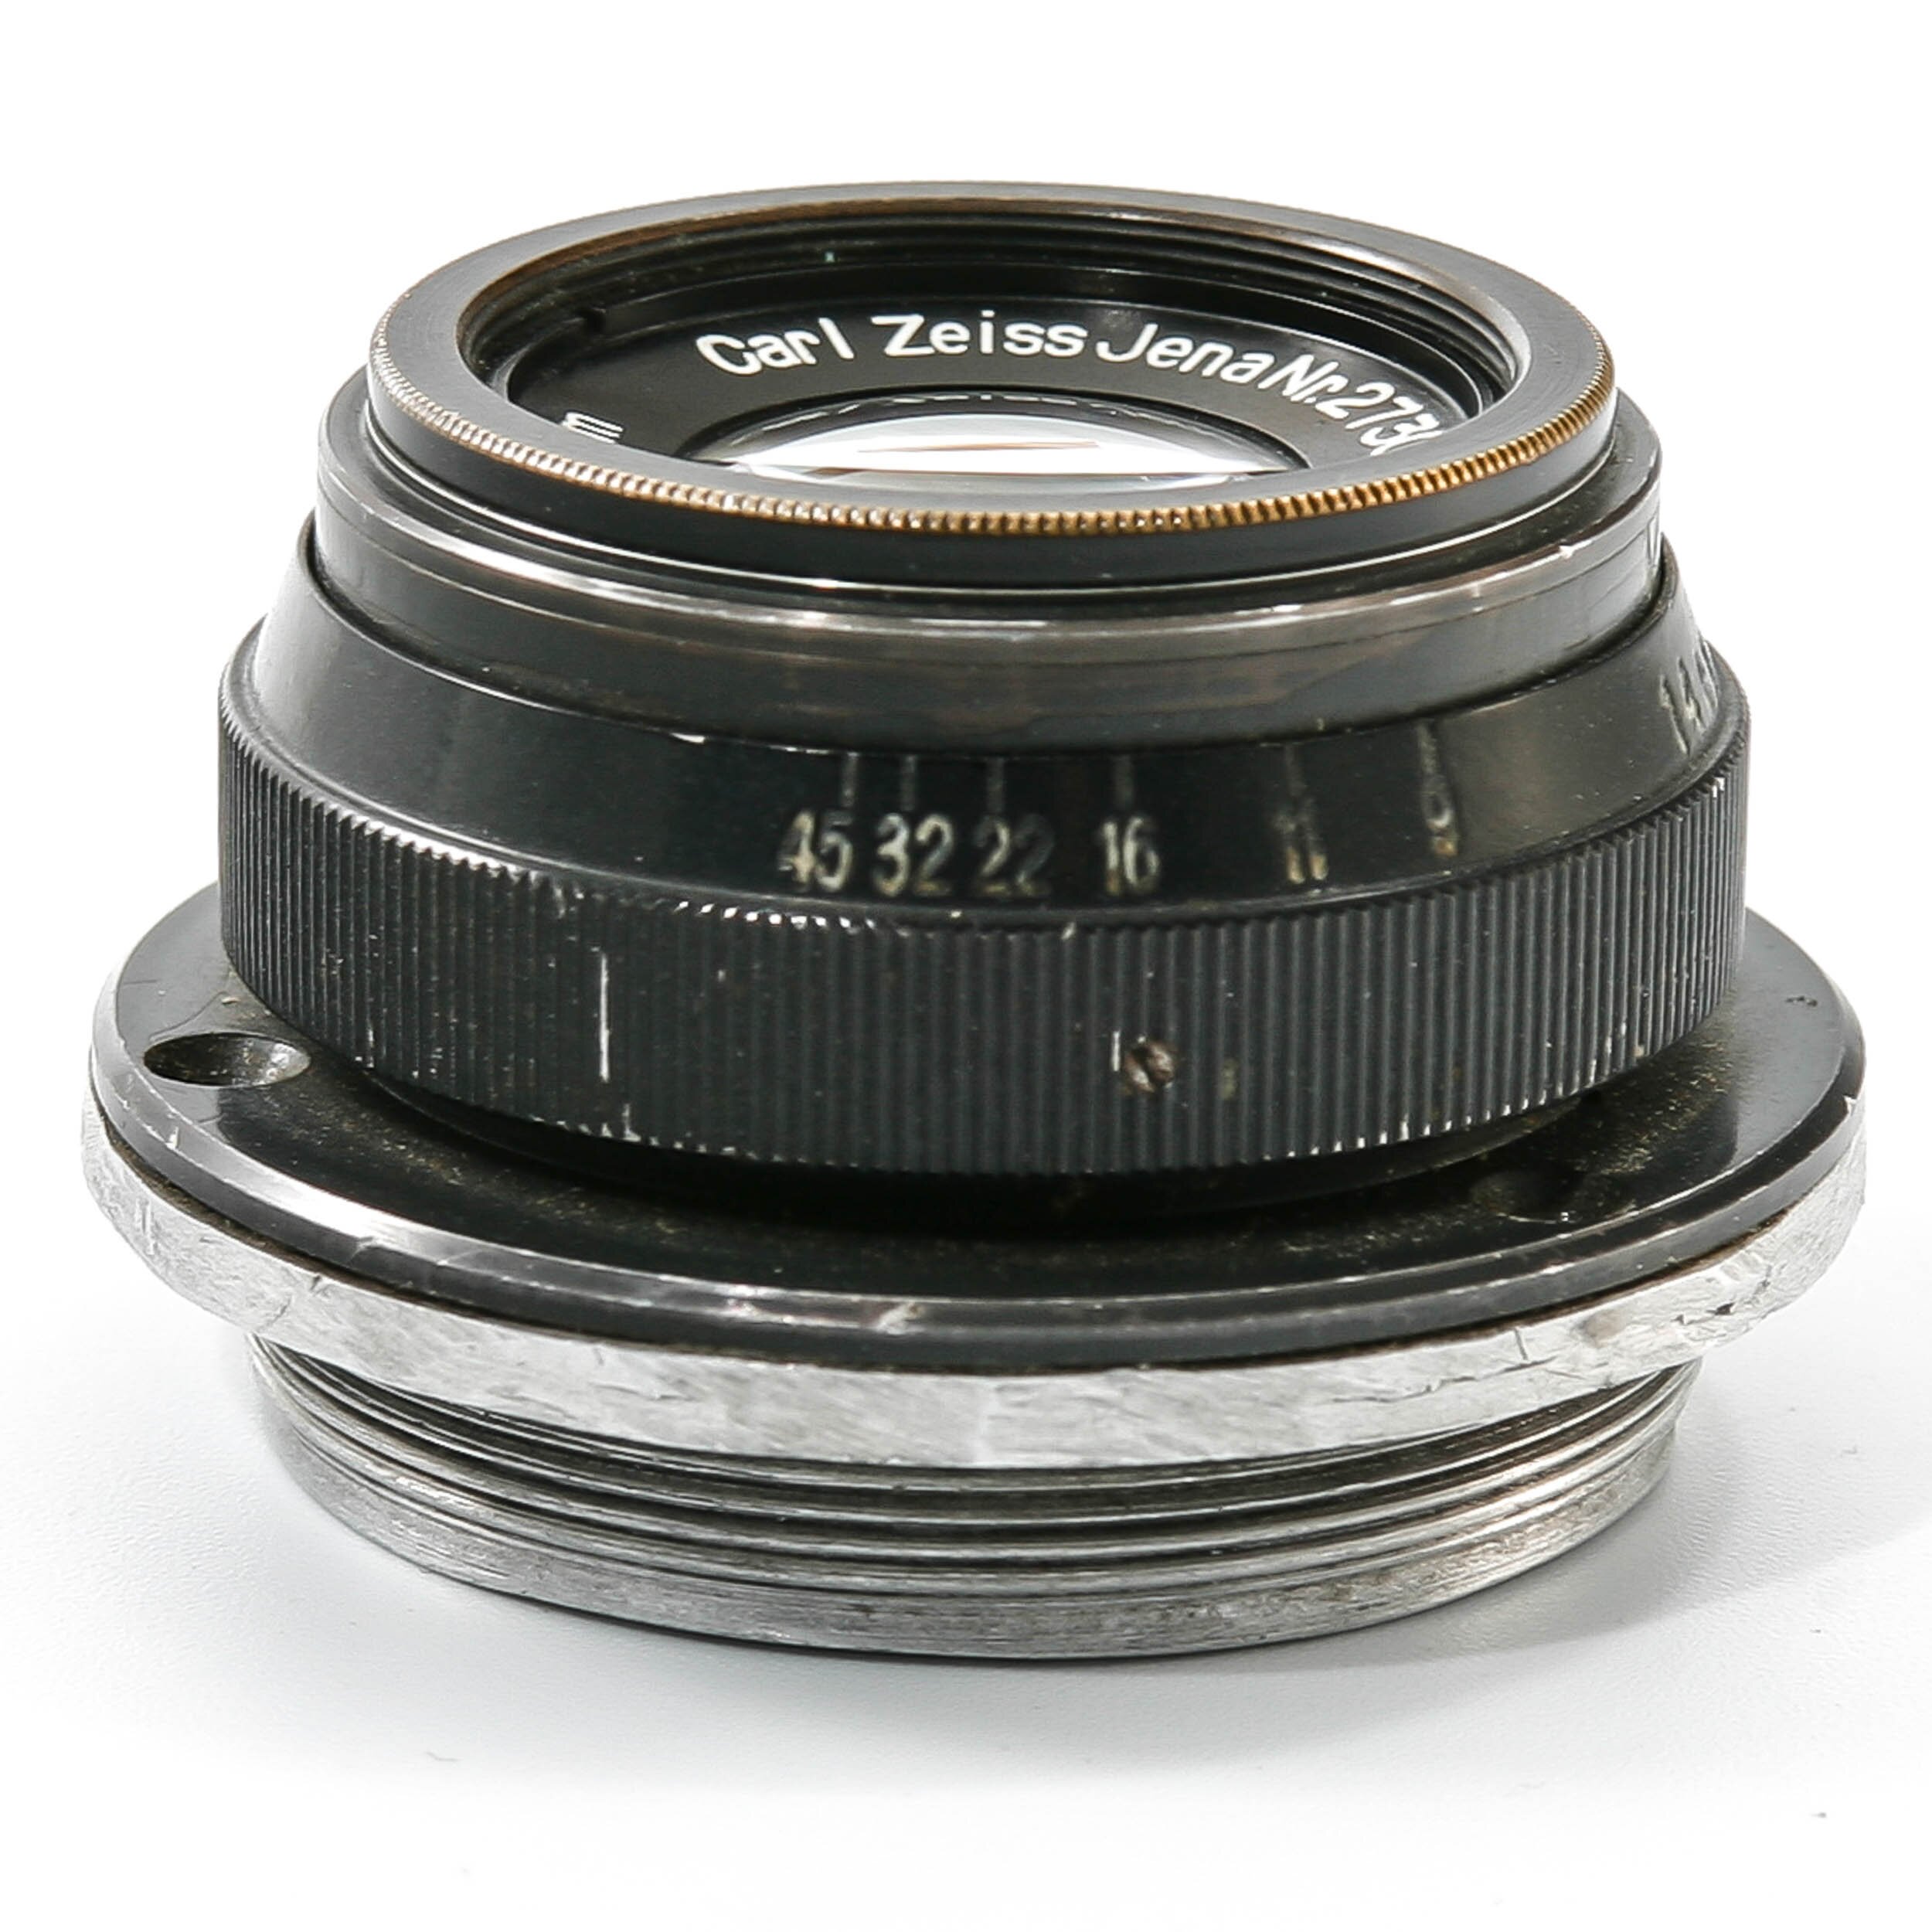 Carl Zeiss M39 9/14cm Apo-Tessar